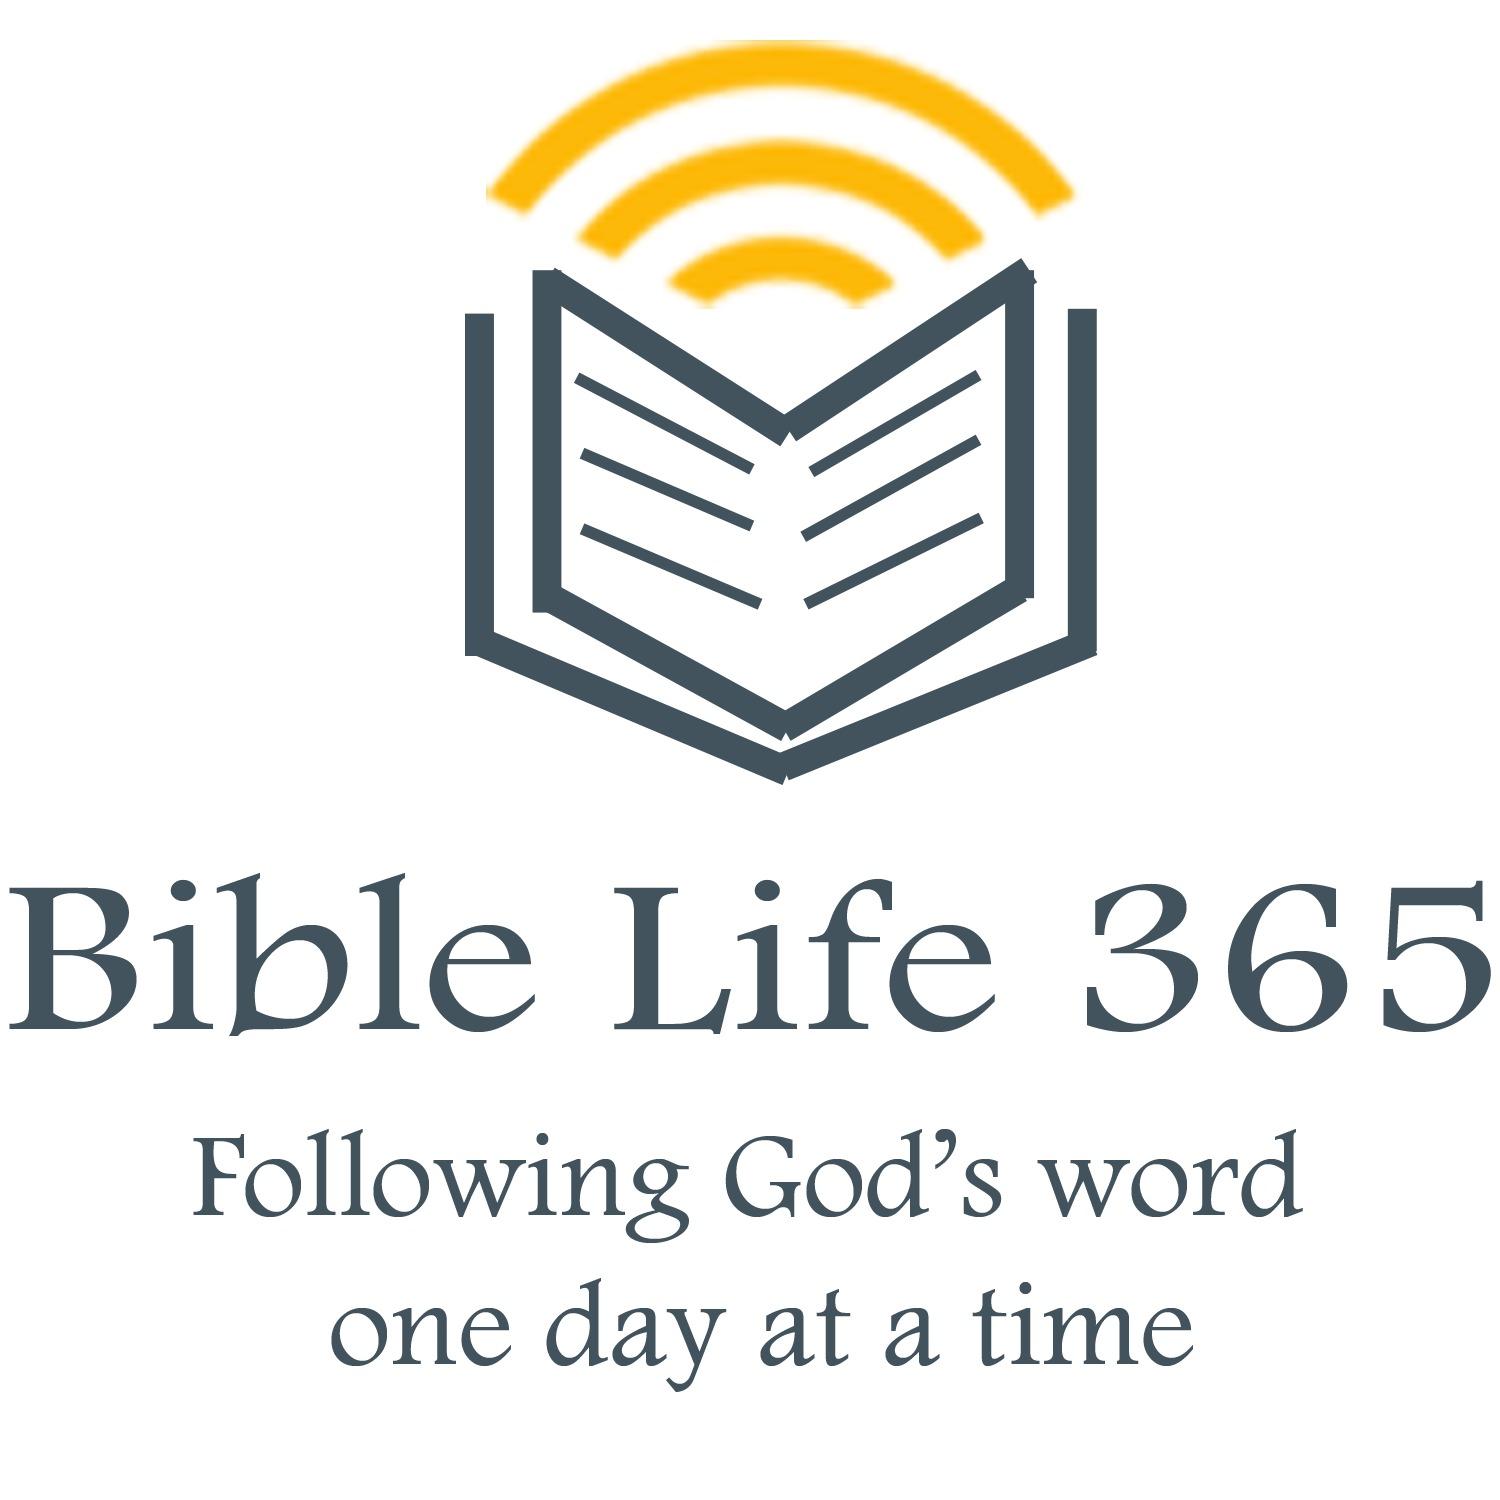 Bible Life 365